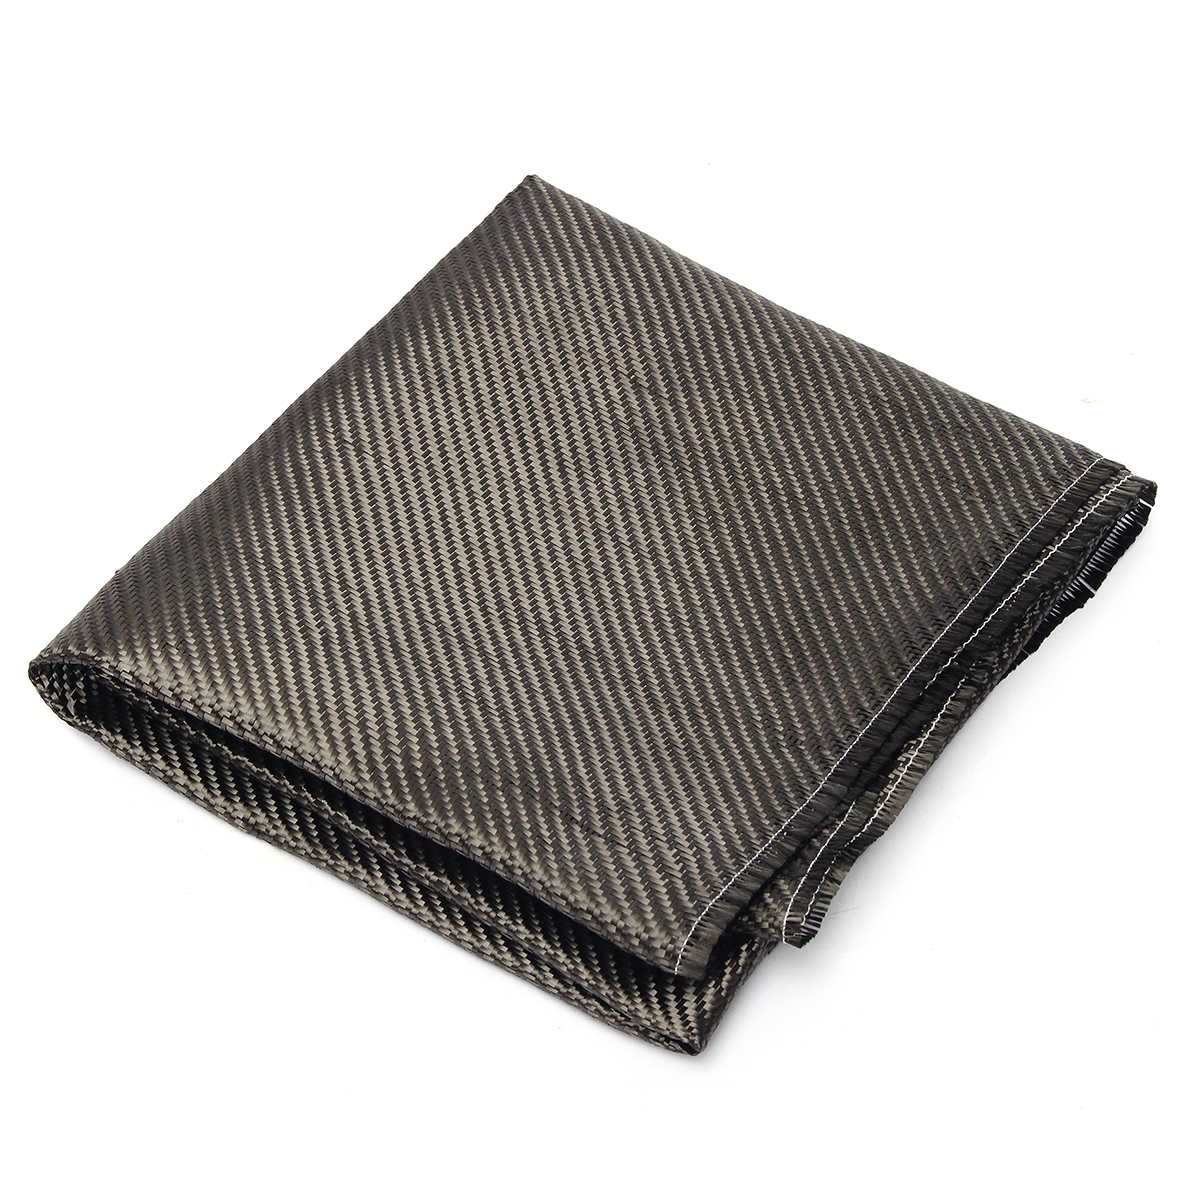 100x100cm 3K Black Carbon Fiber Cloth Fabric Plain Weave 2-2 Twill Weaving